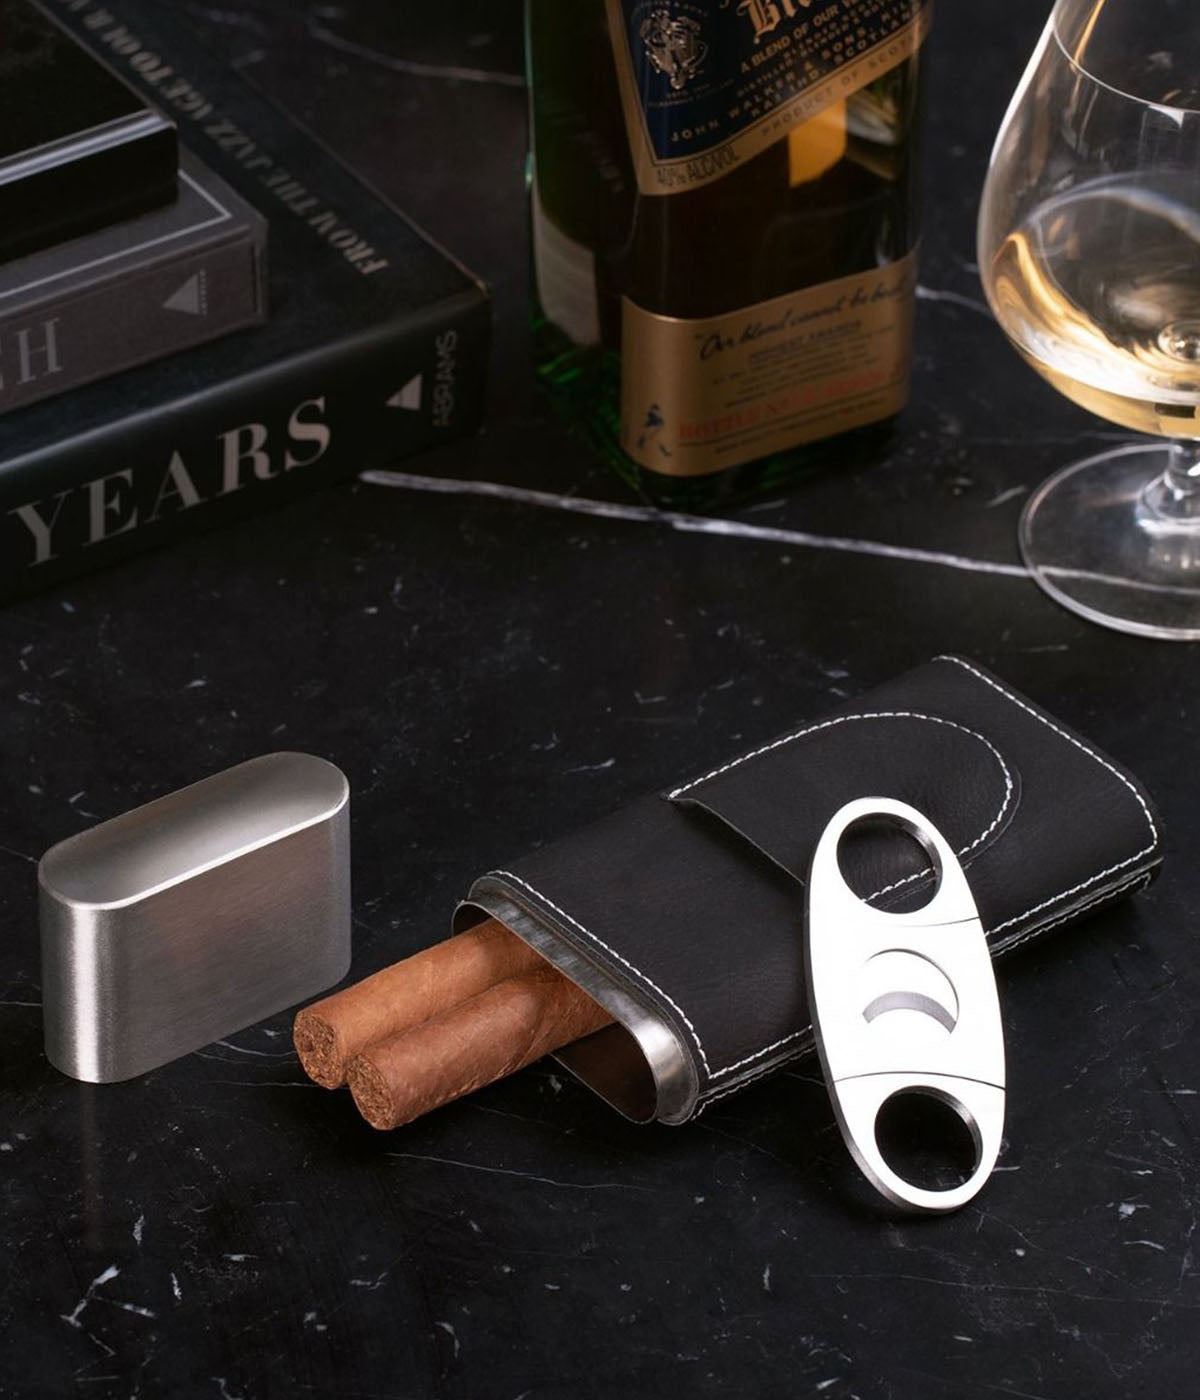 Harrison Leather Cigar Case in Black